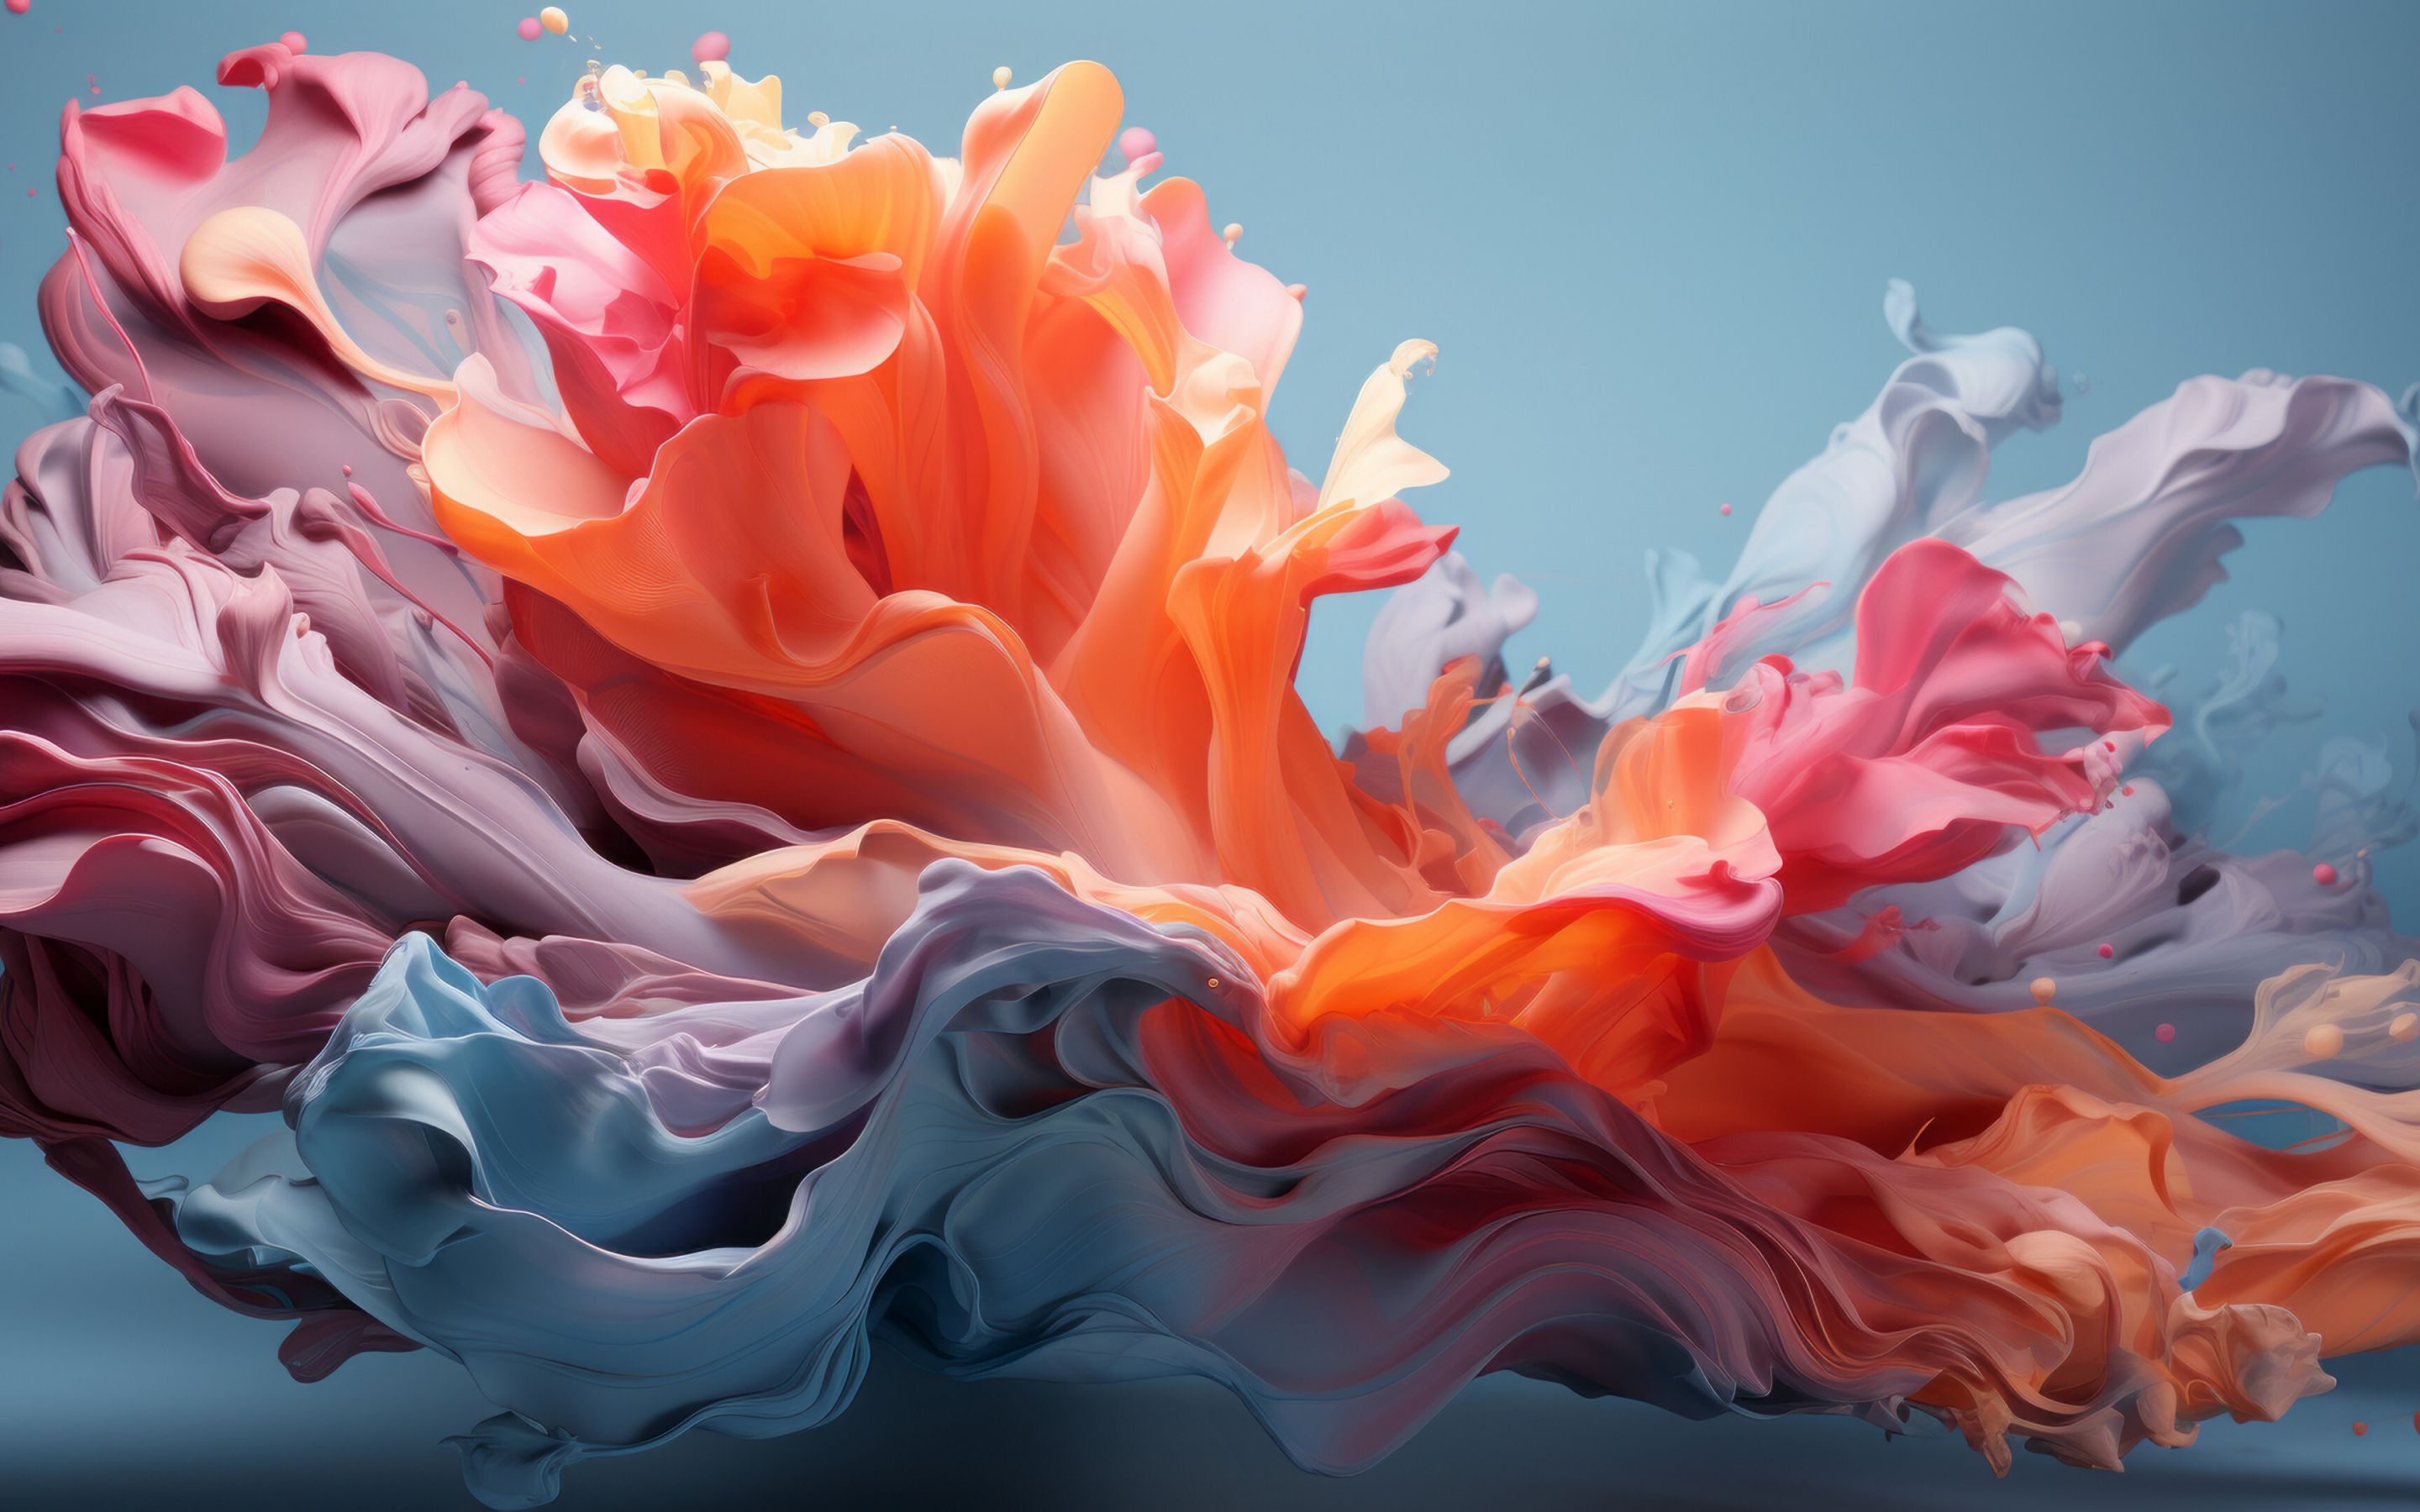 Colour blast, abstract, Windows 11 stock photo, 2880x1800 wallpaper